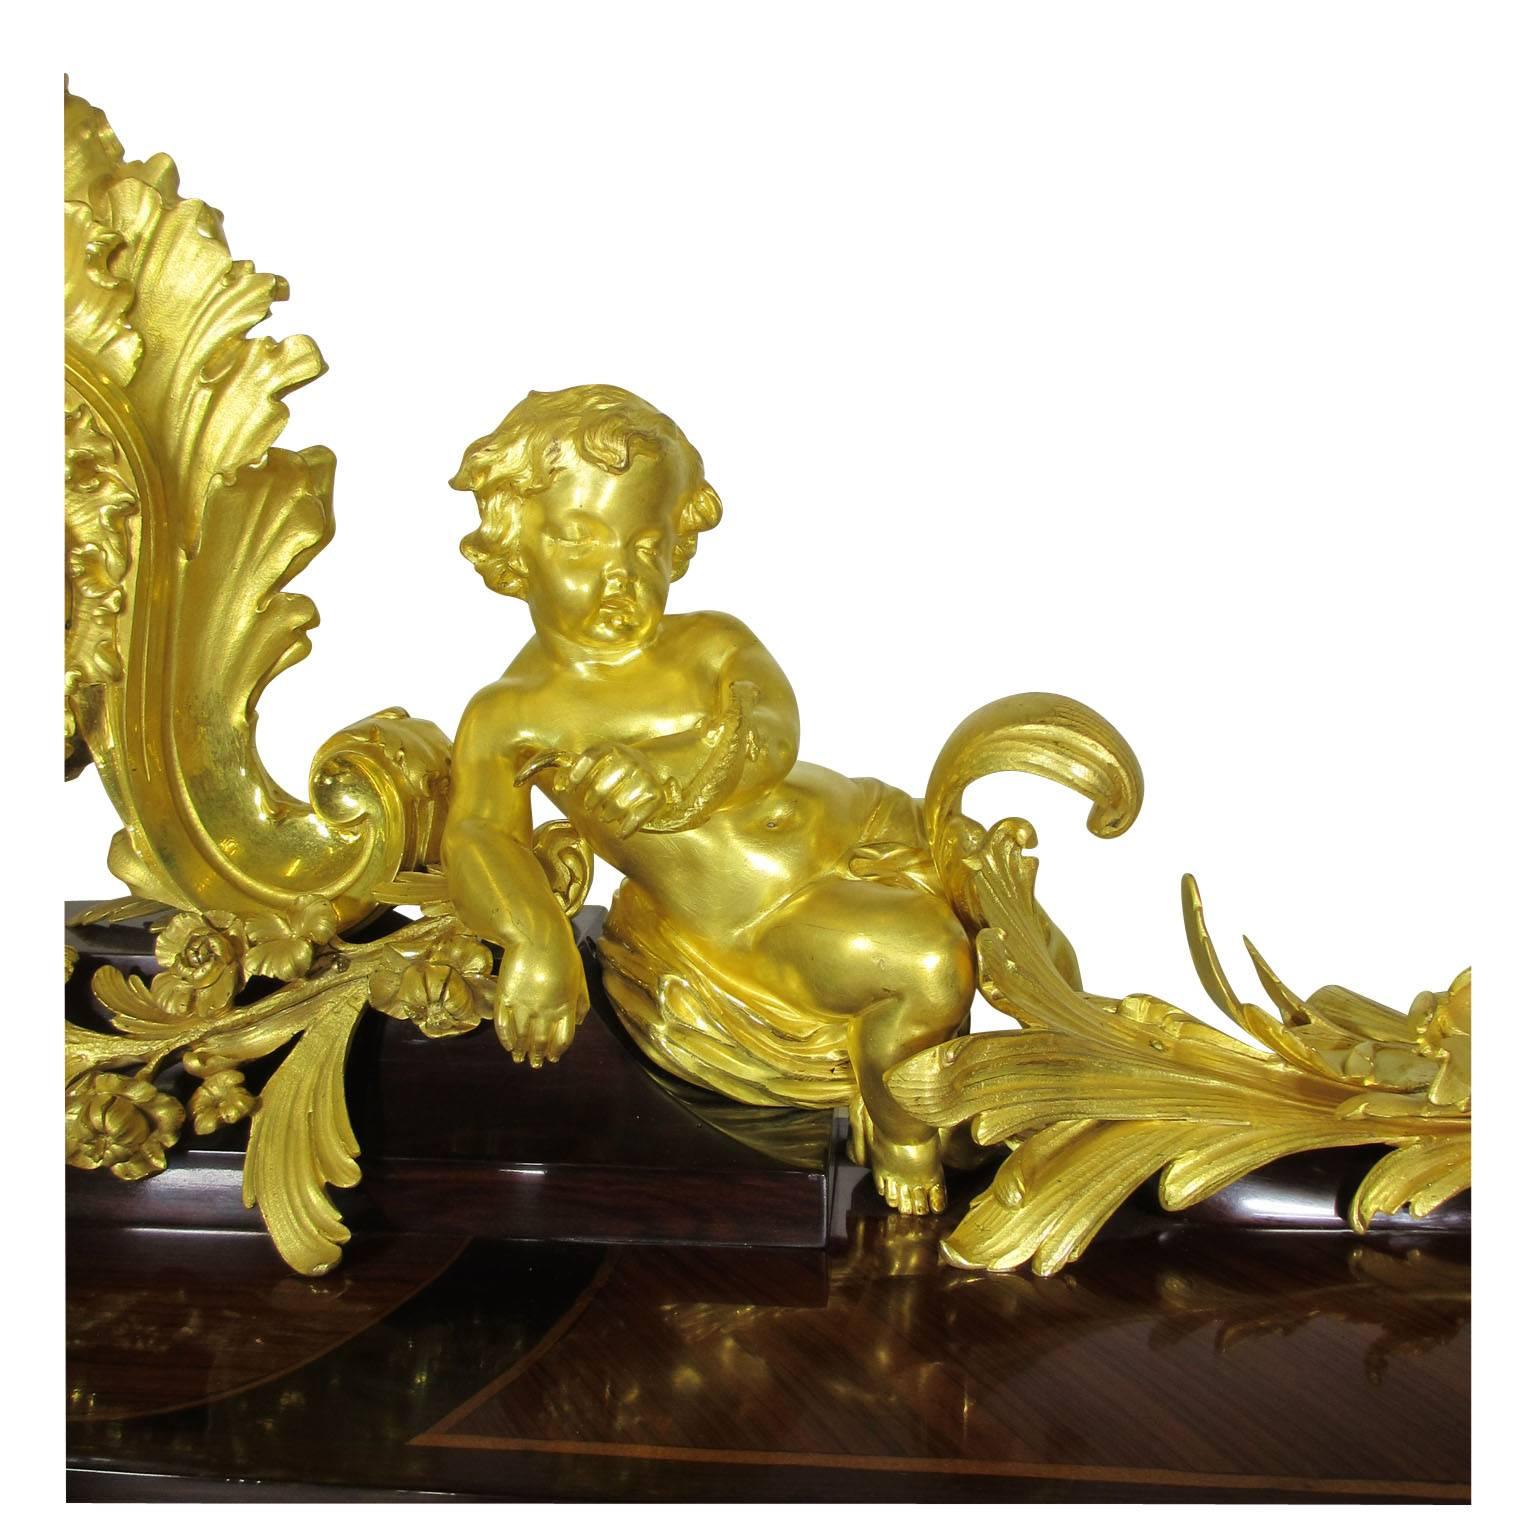 French 19th-Century Louis XV Style Figural Gilt-Bronze Mounted Bureau-Plat Desk For Sale 3